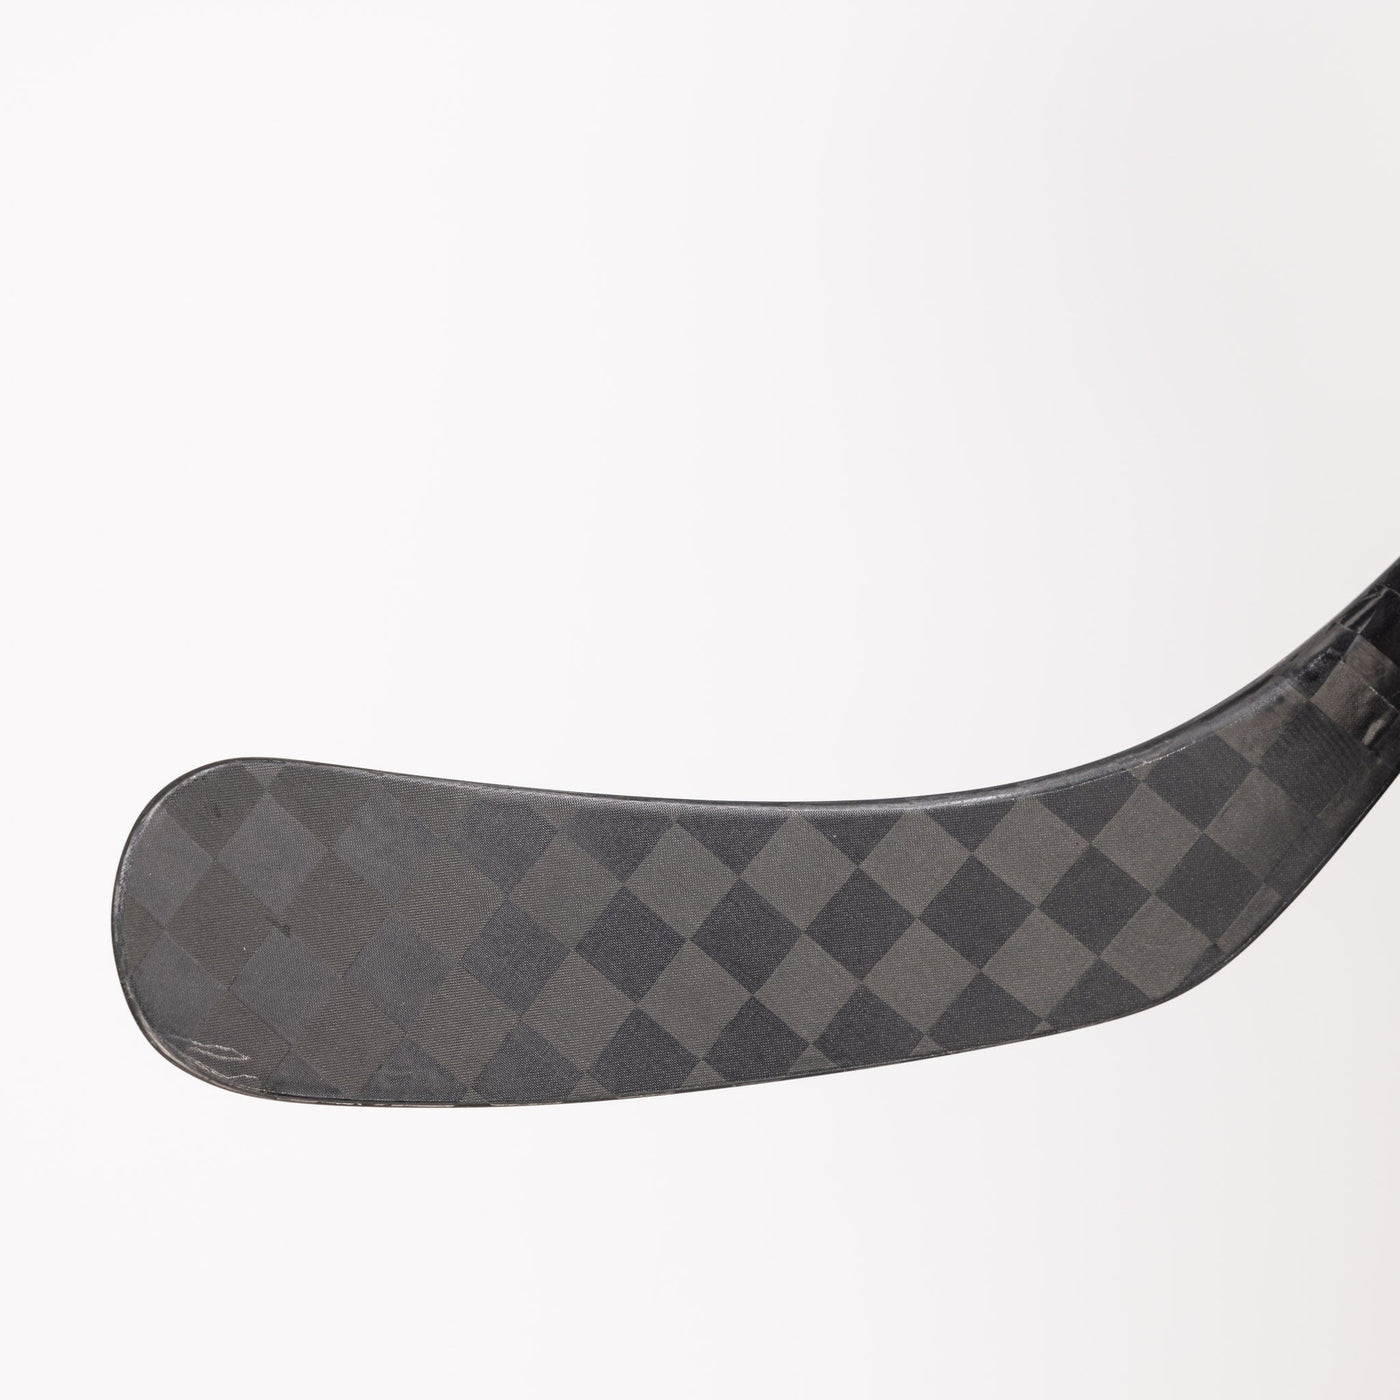 Bauer Vapor HyperLite2 Junior Hockey Stick - 30 Flex - The Hockey Shop Source For Sports